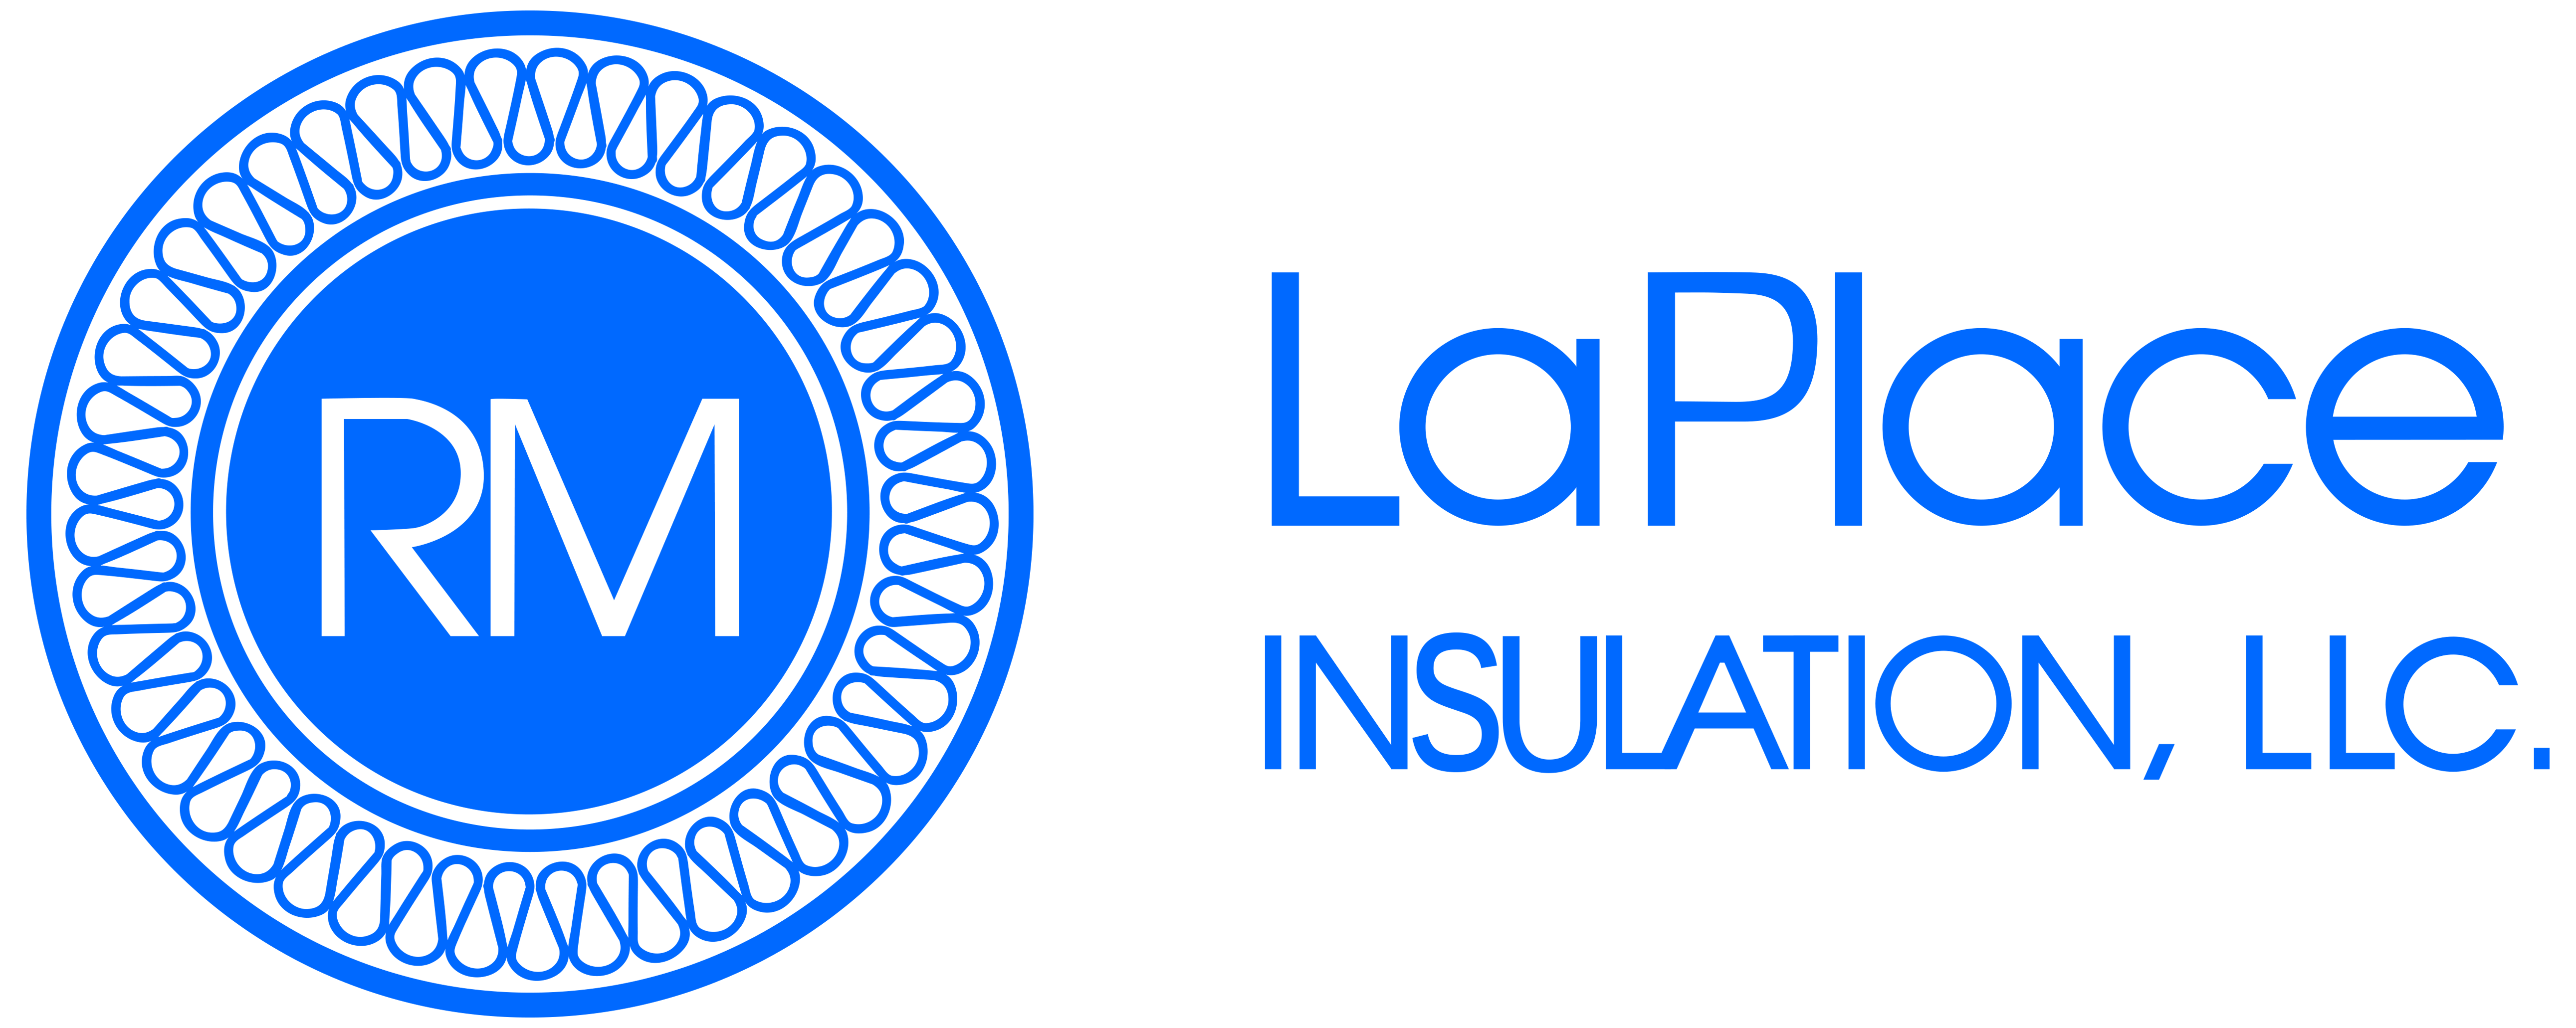 RMLaPlace Insulation, LLC Logo